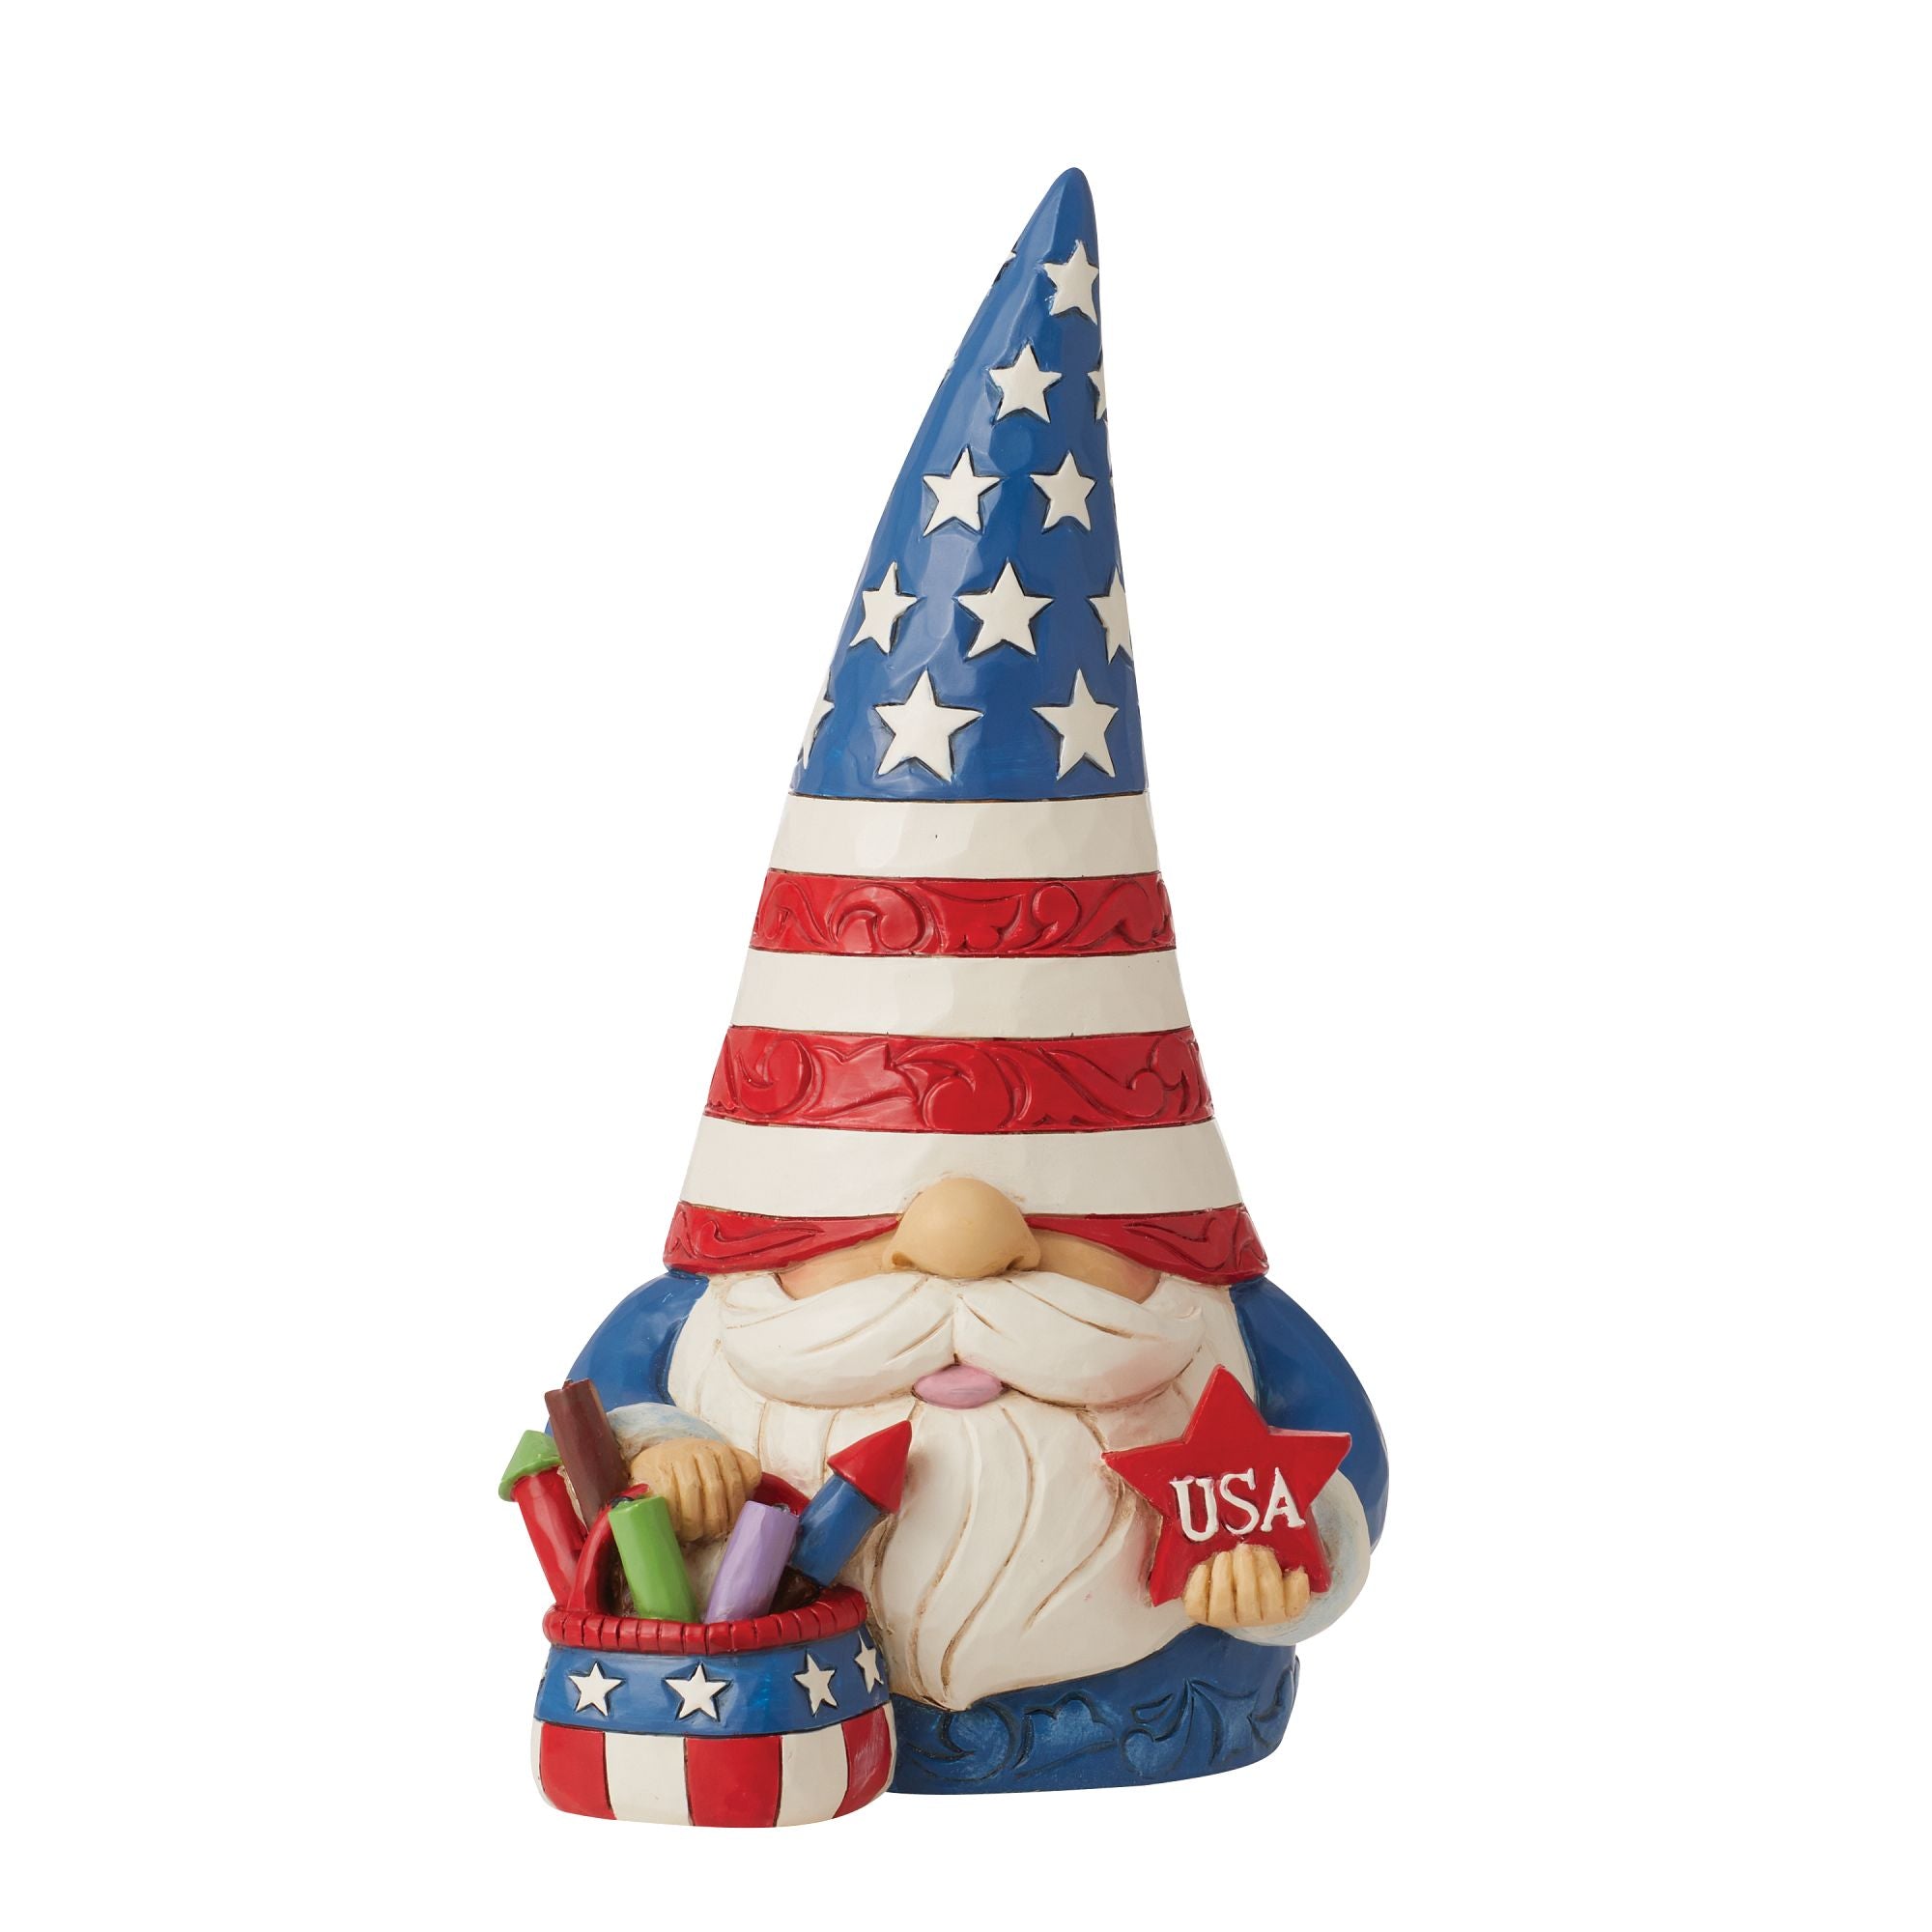 Patriotic Gnome Fireworks Fig